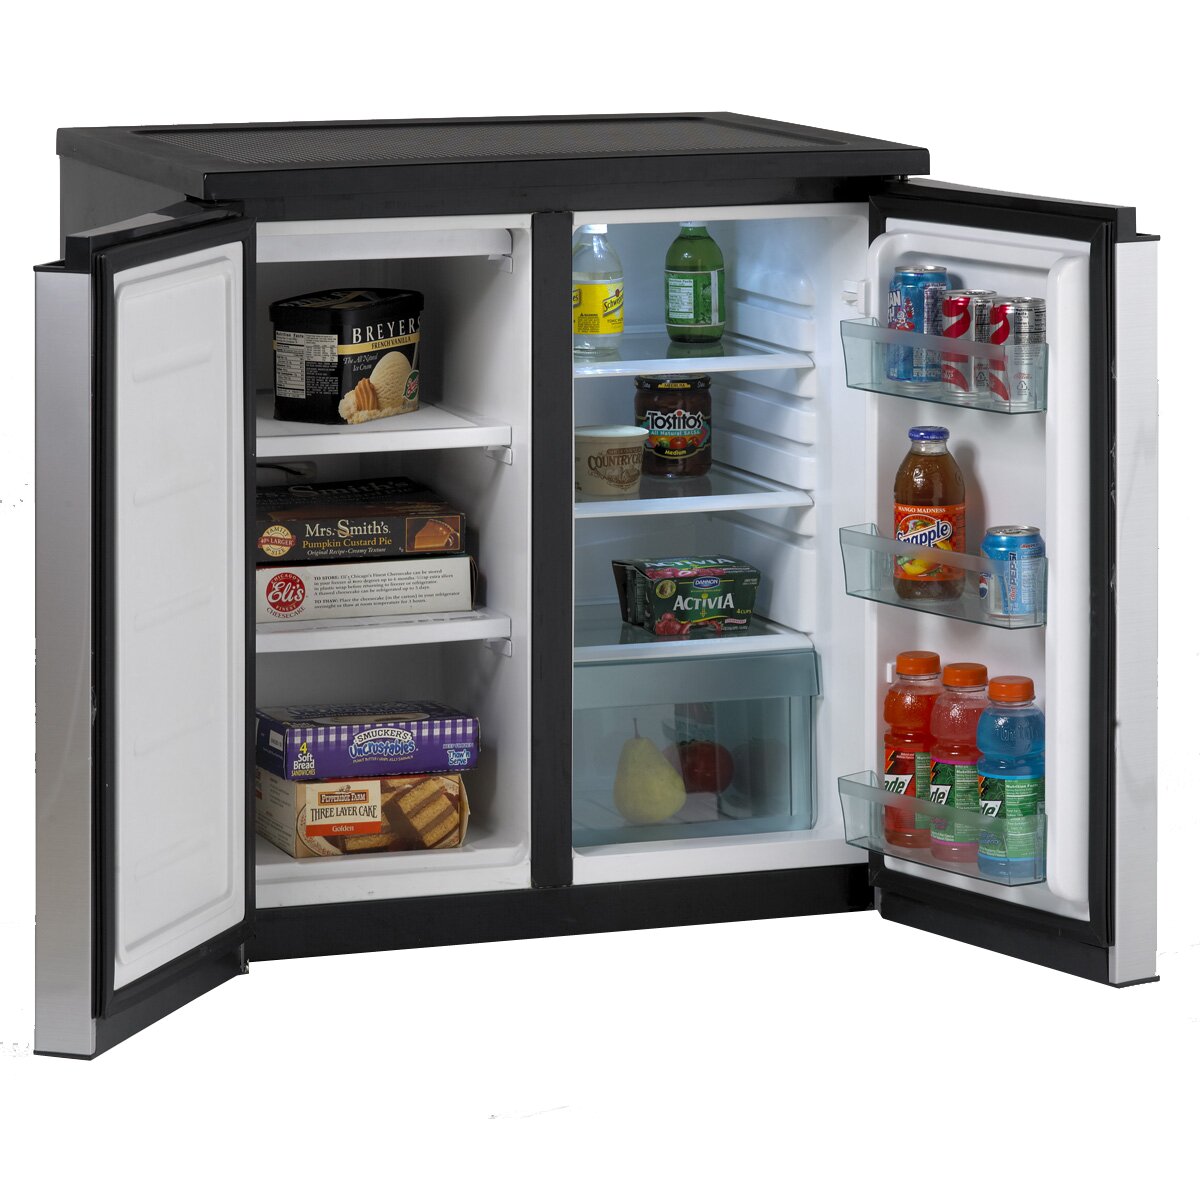 small fridge freezer